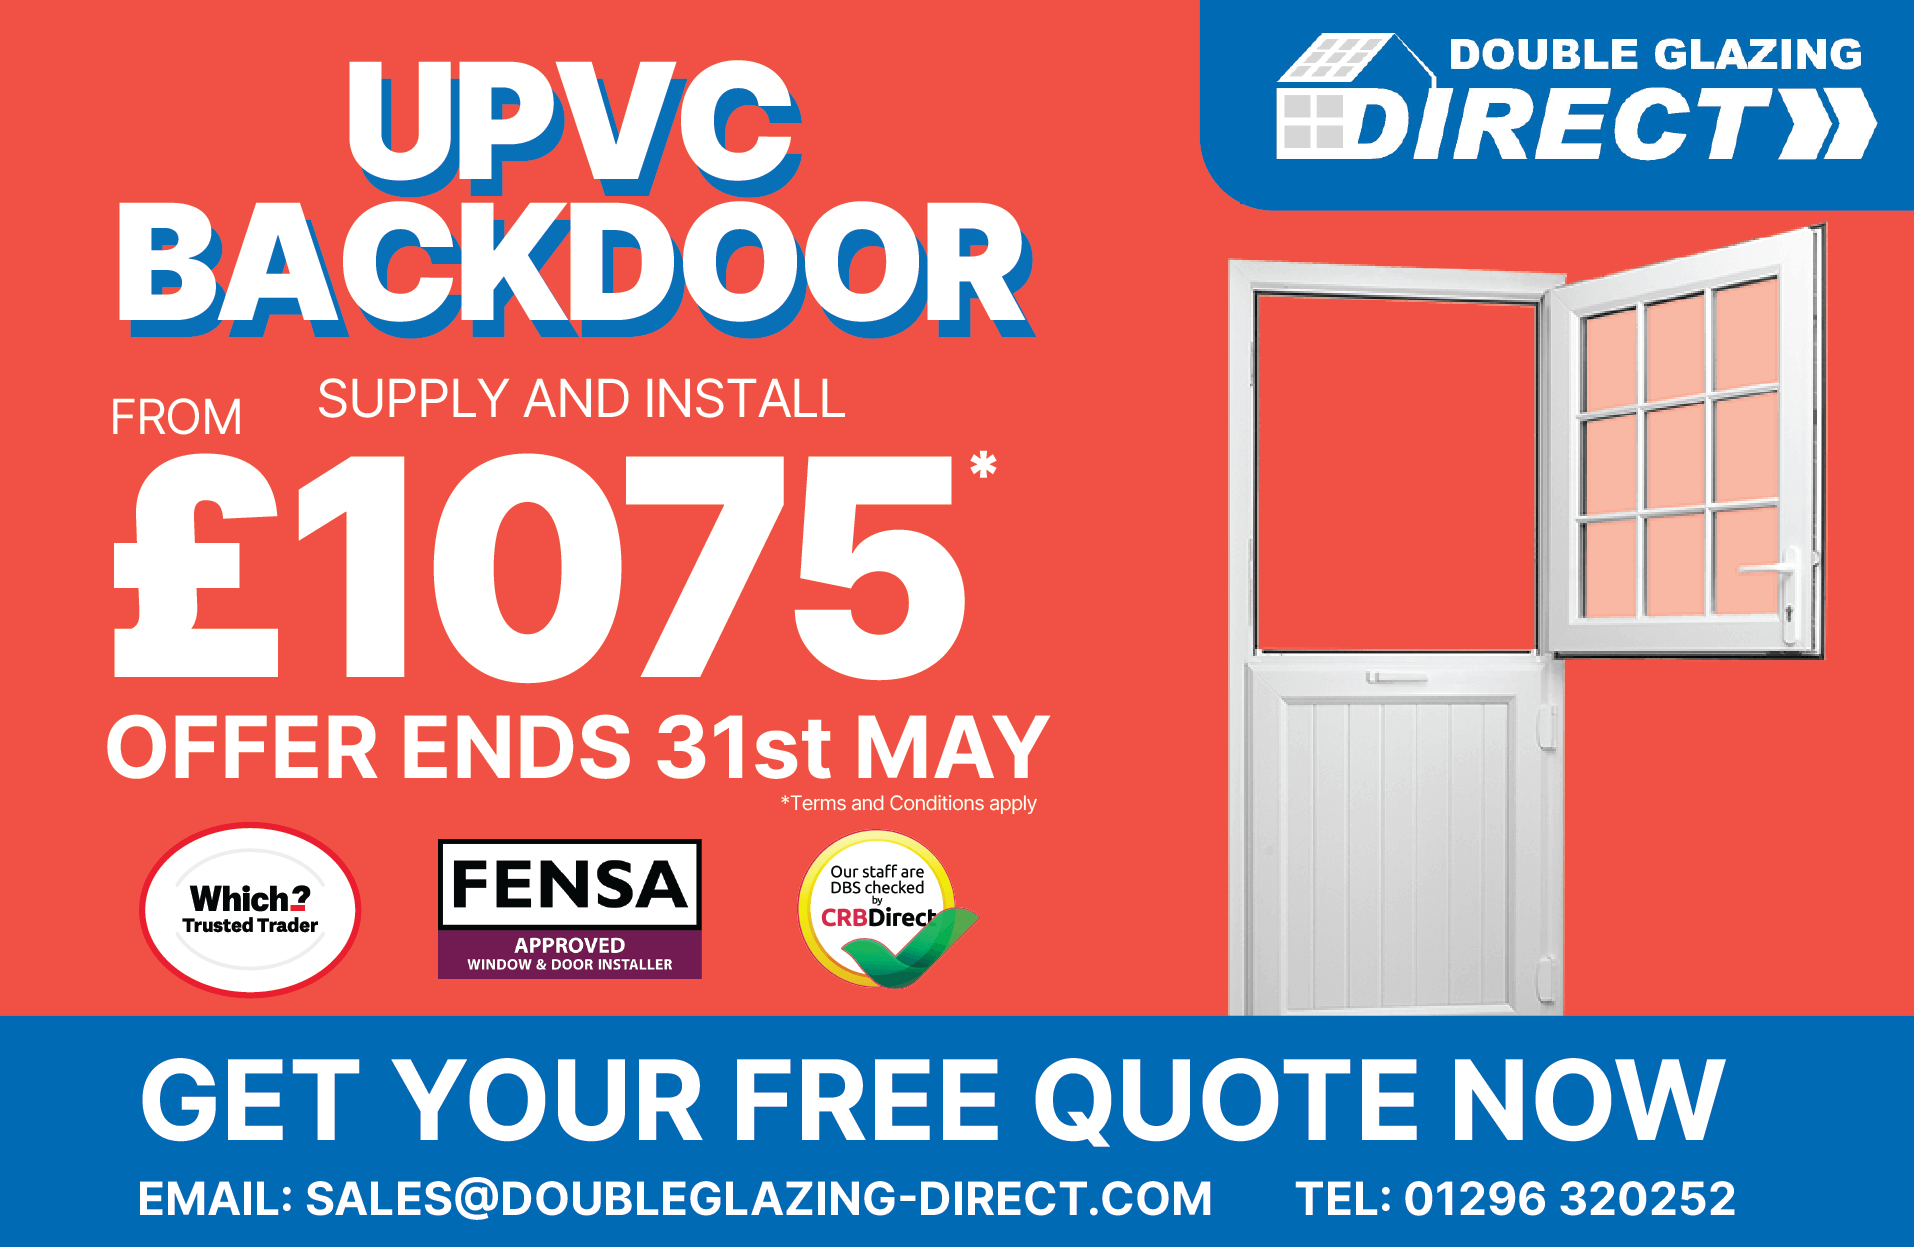 UPVC backdoor offer